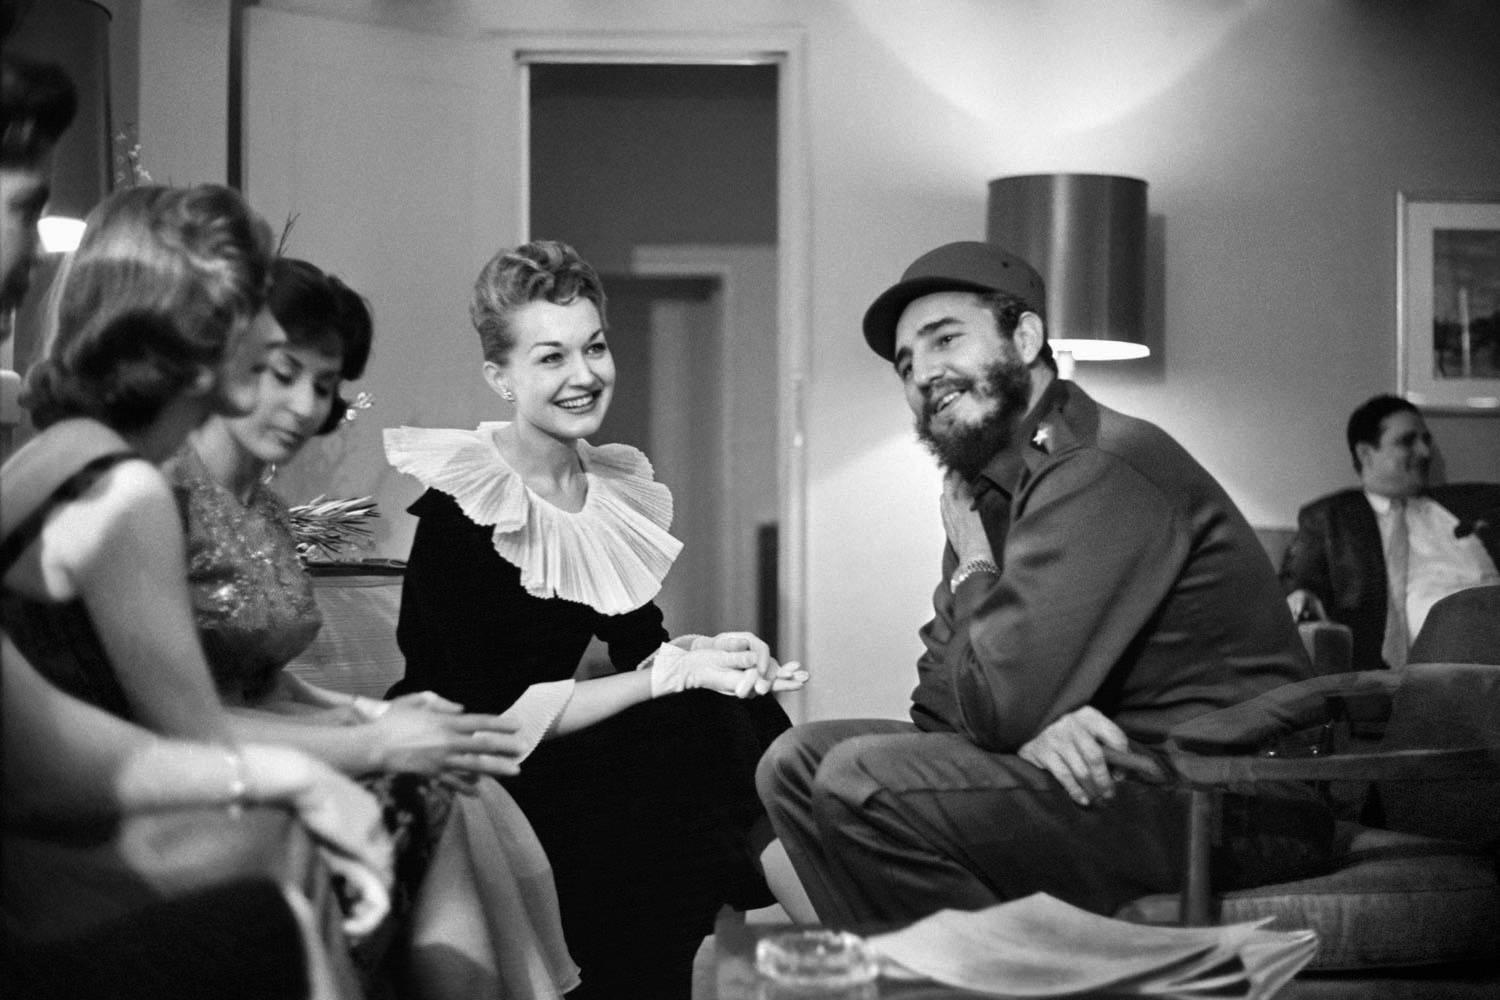 Alberto Korda Portrait Photograph - Fidel Castro and the radio queens of New York. Wednesday, April 22, 1959